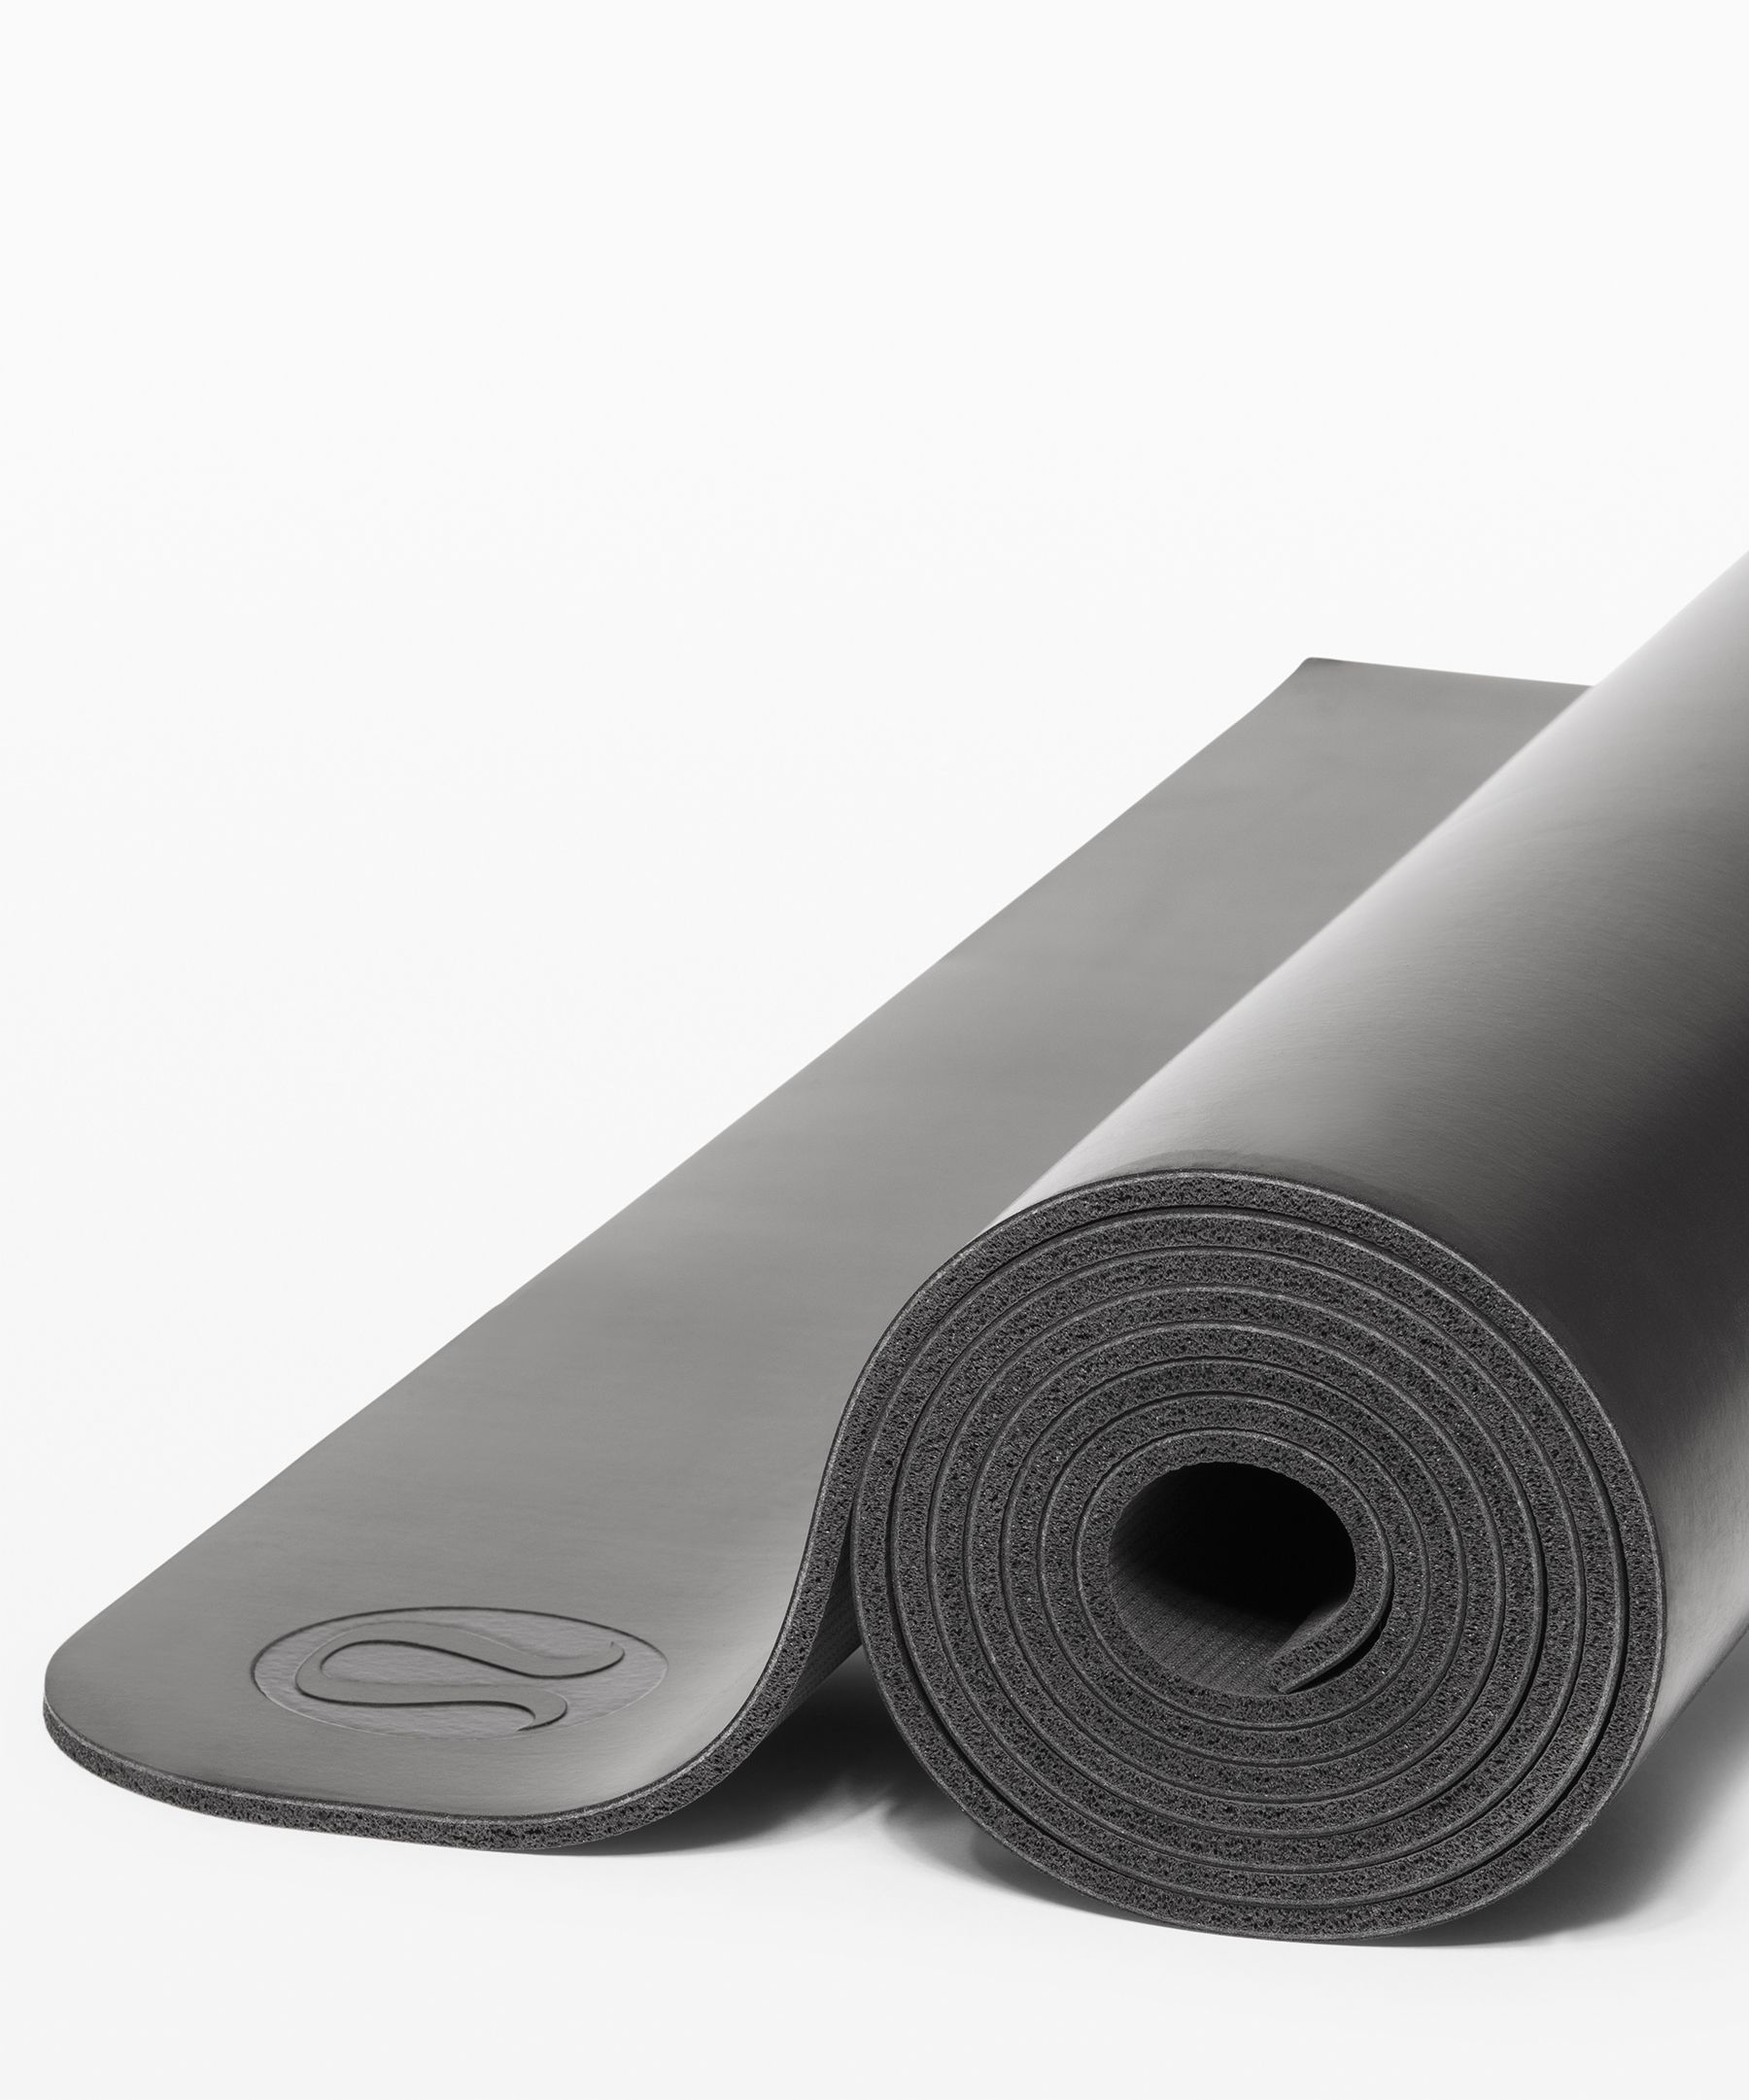 5mm Lululemon Yoga Mat (Marbled)